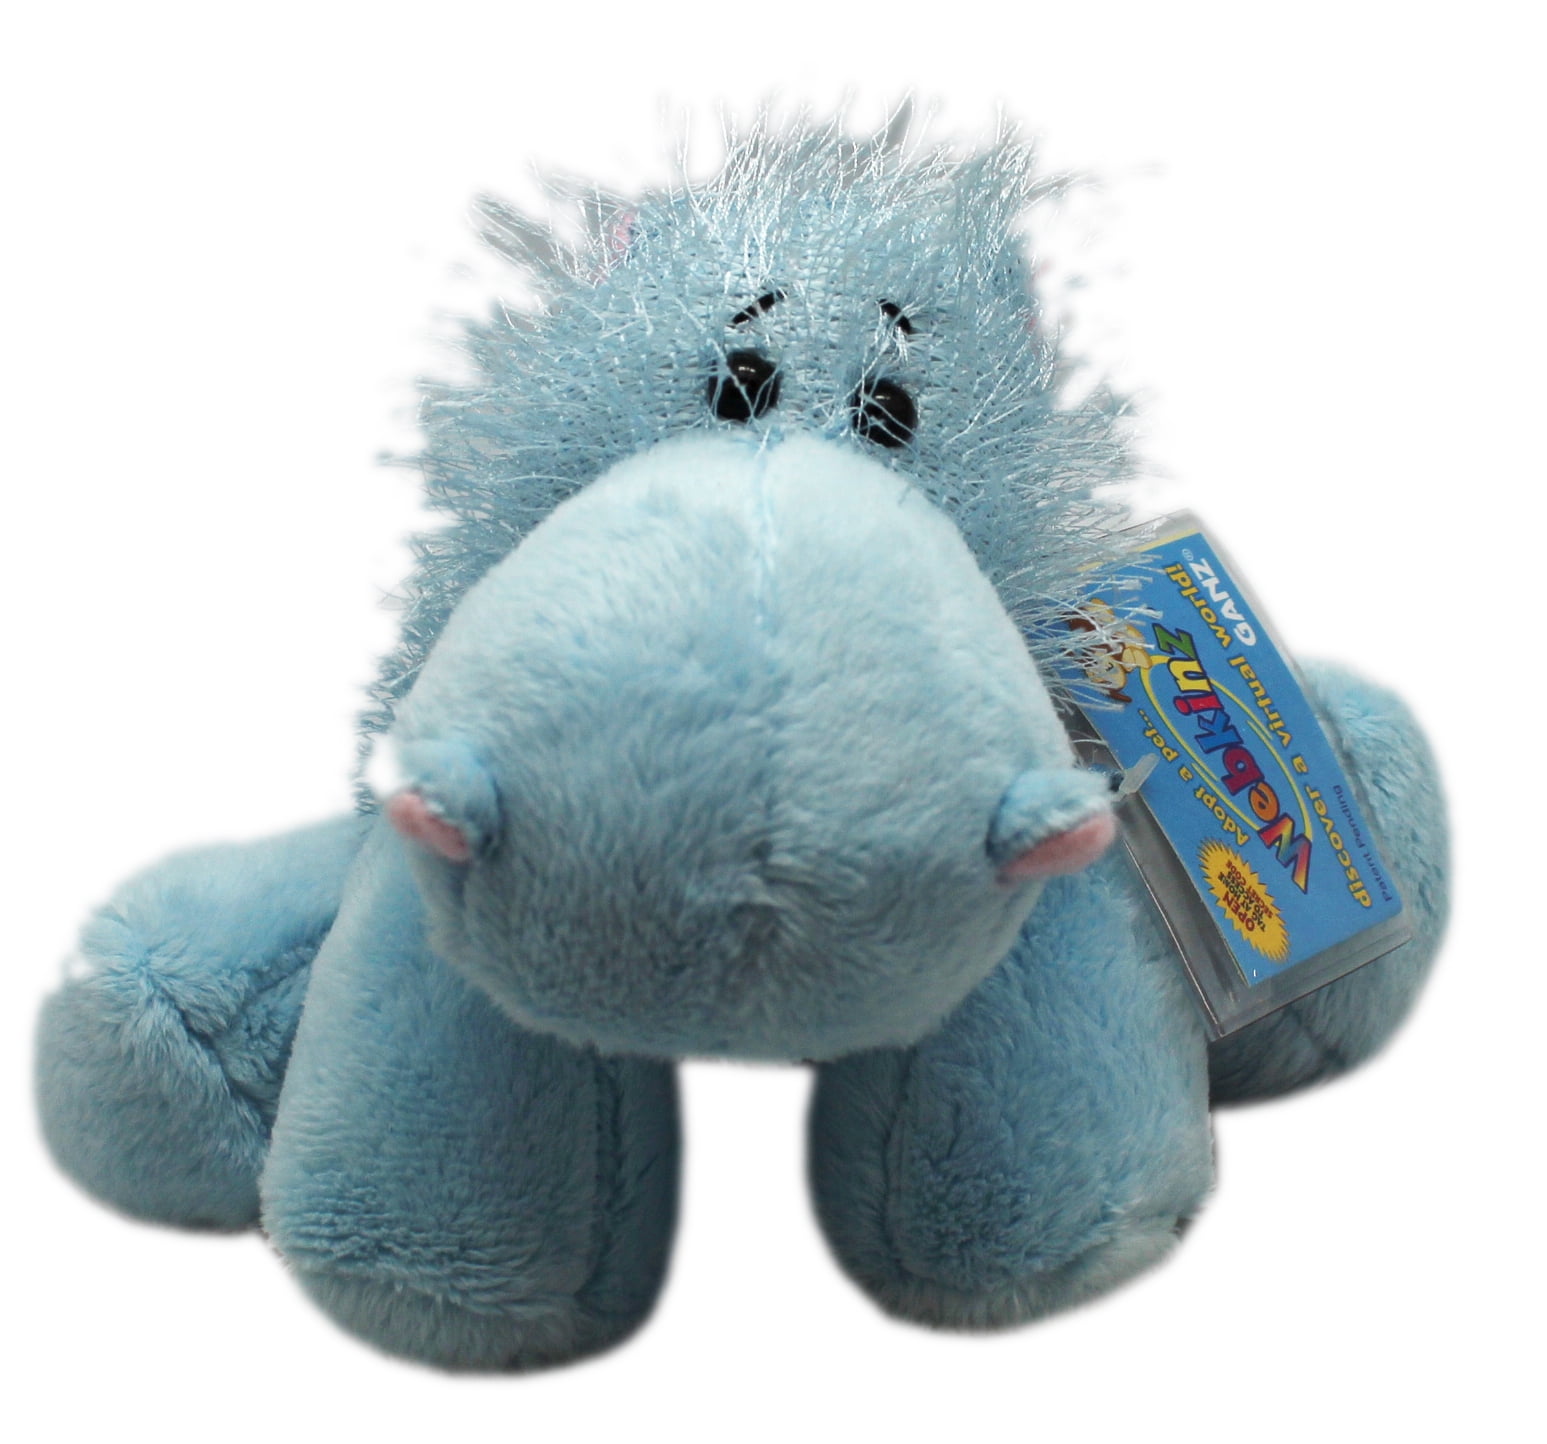 baby hippo plush